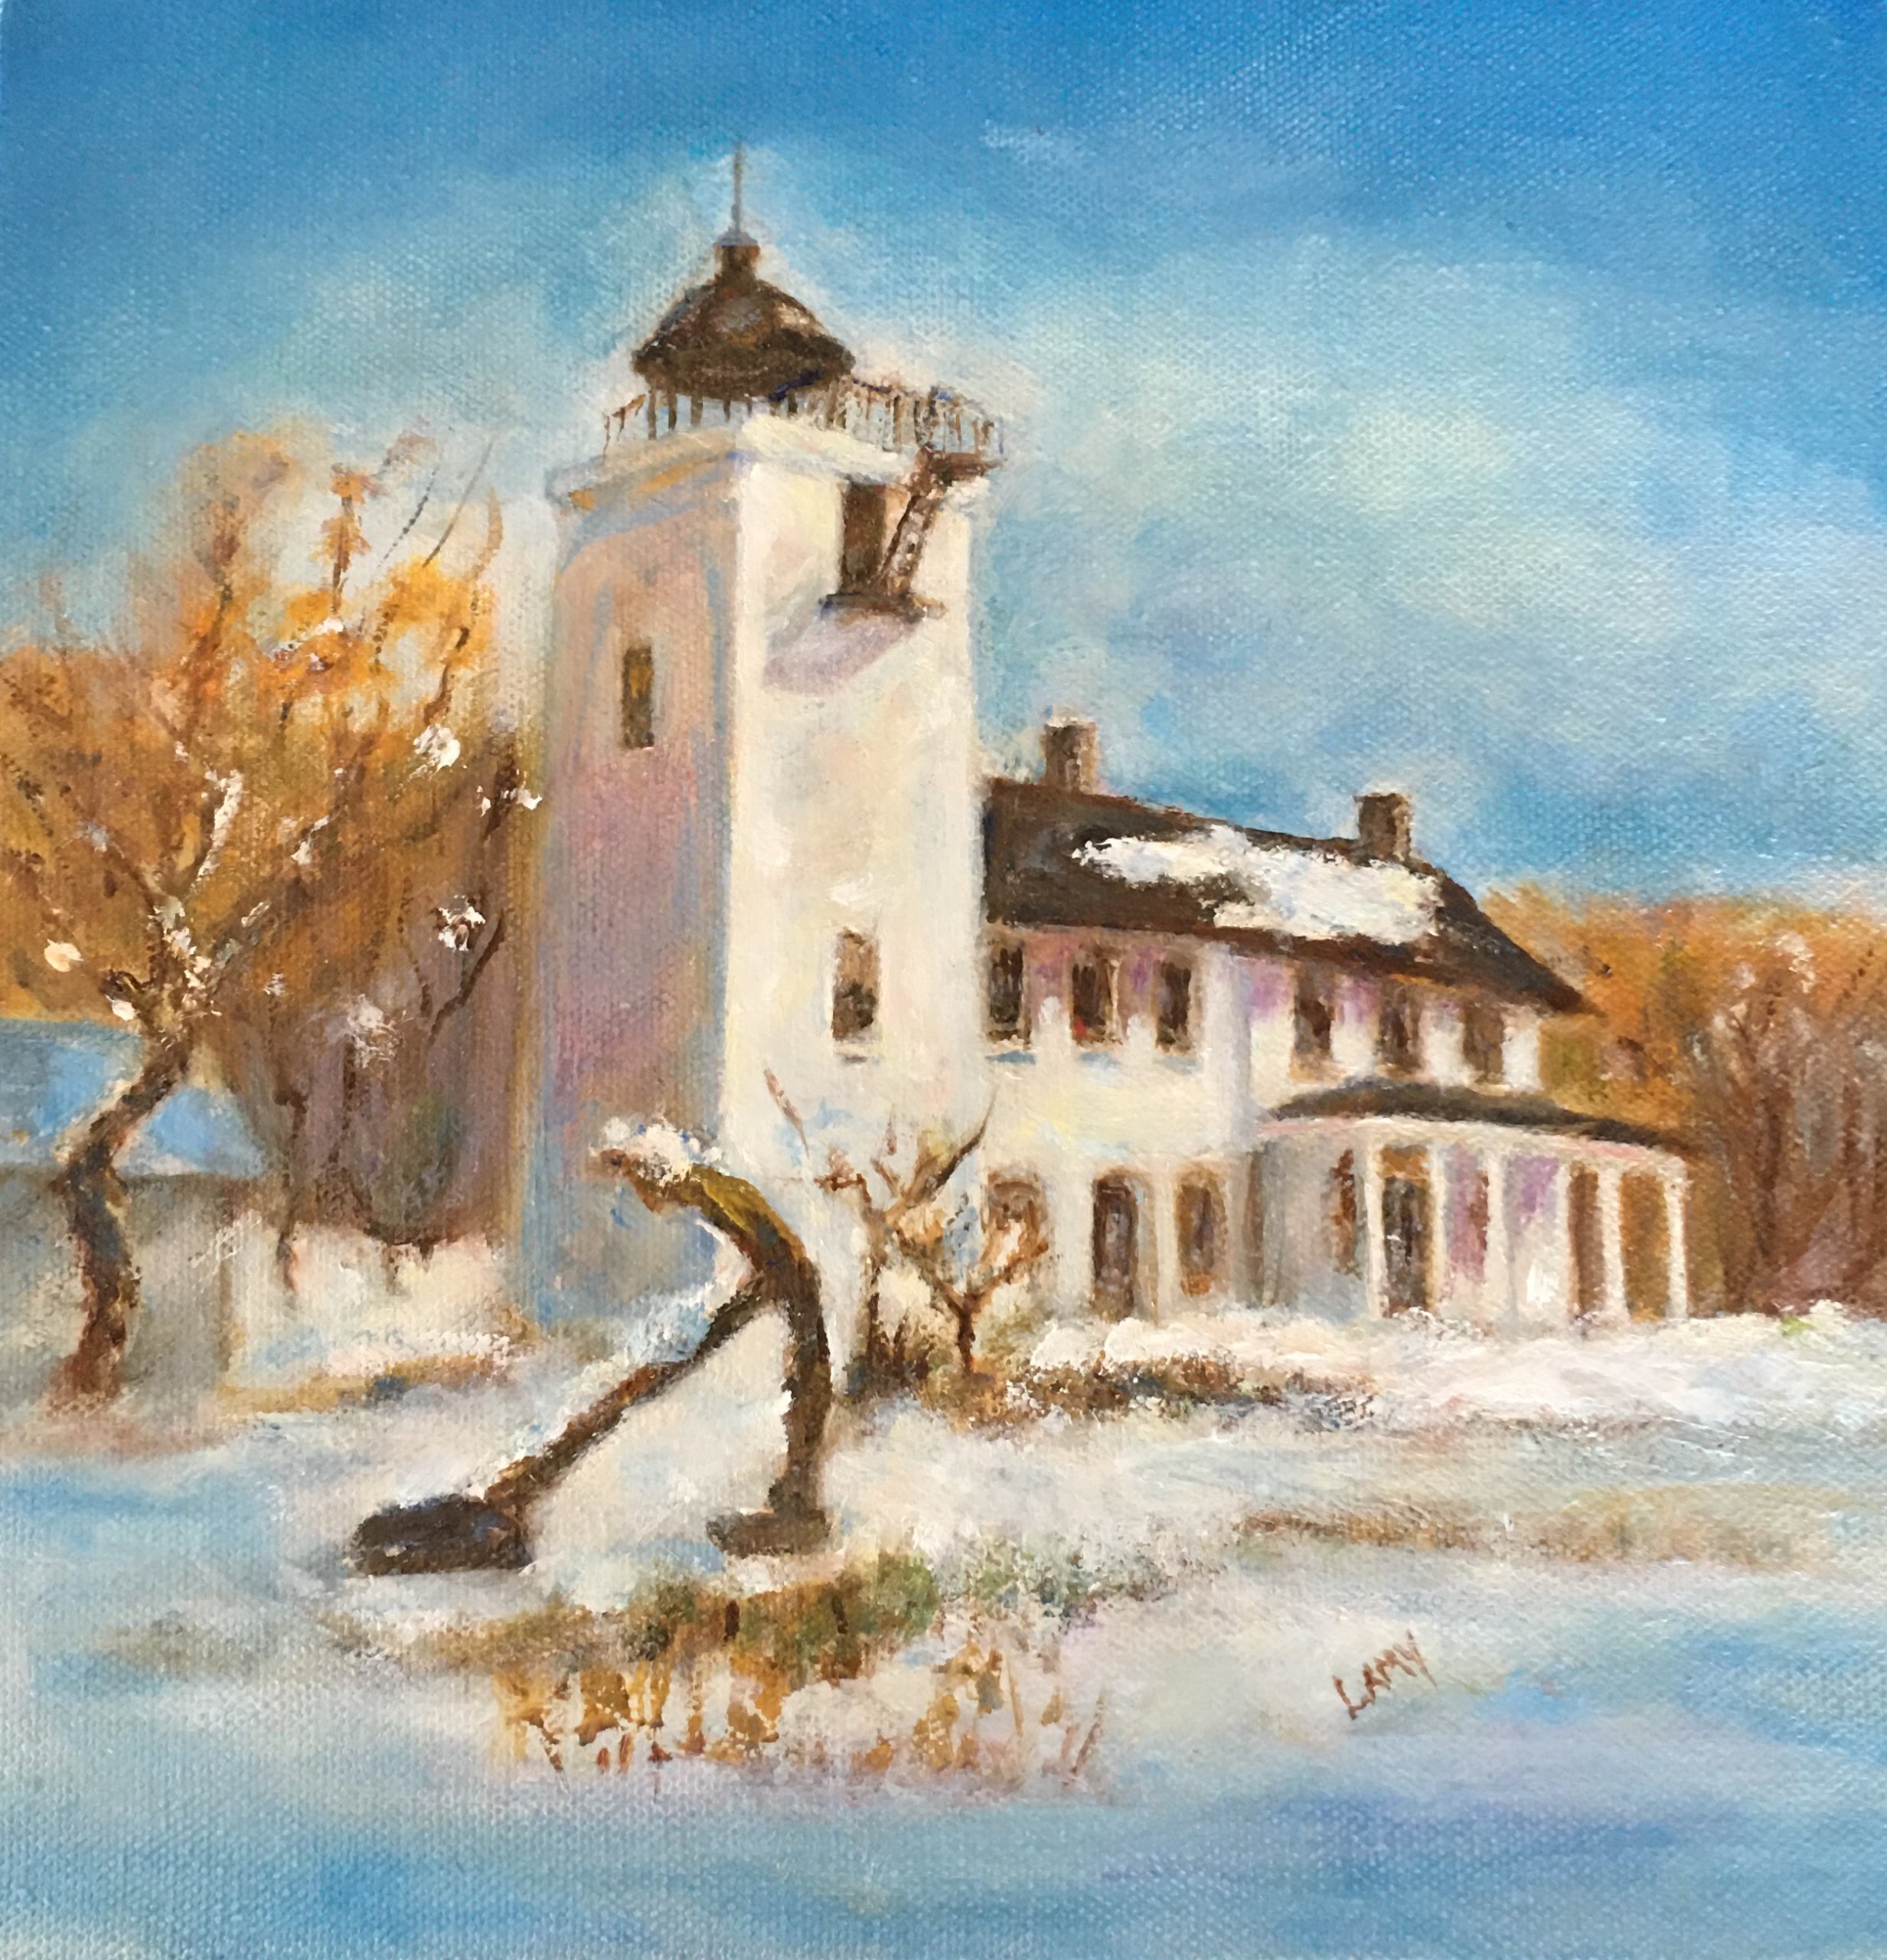 "Horton Pt Lighthouse After Snowfall" by Marilyn Lamy, Oil on Canvas